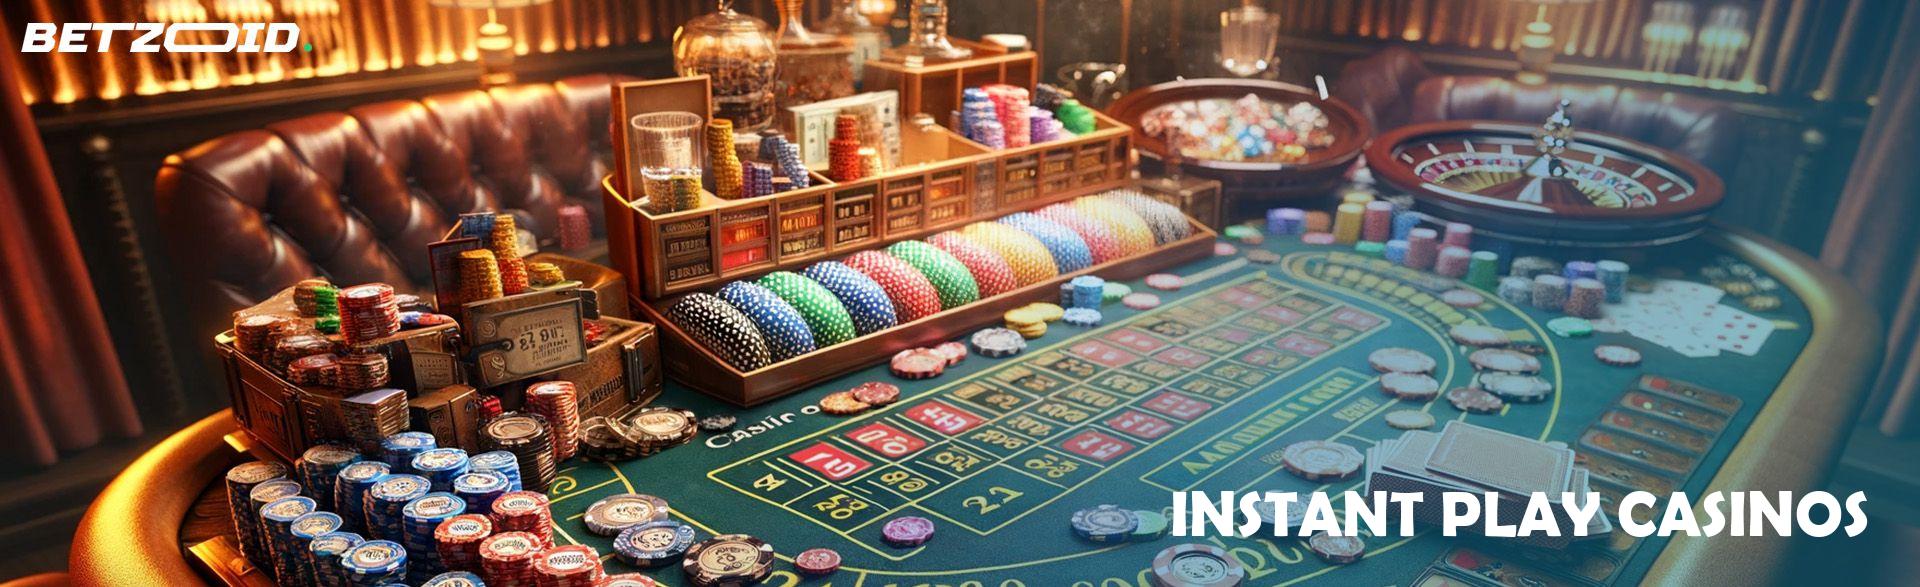 Instant Play Casinos.